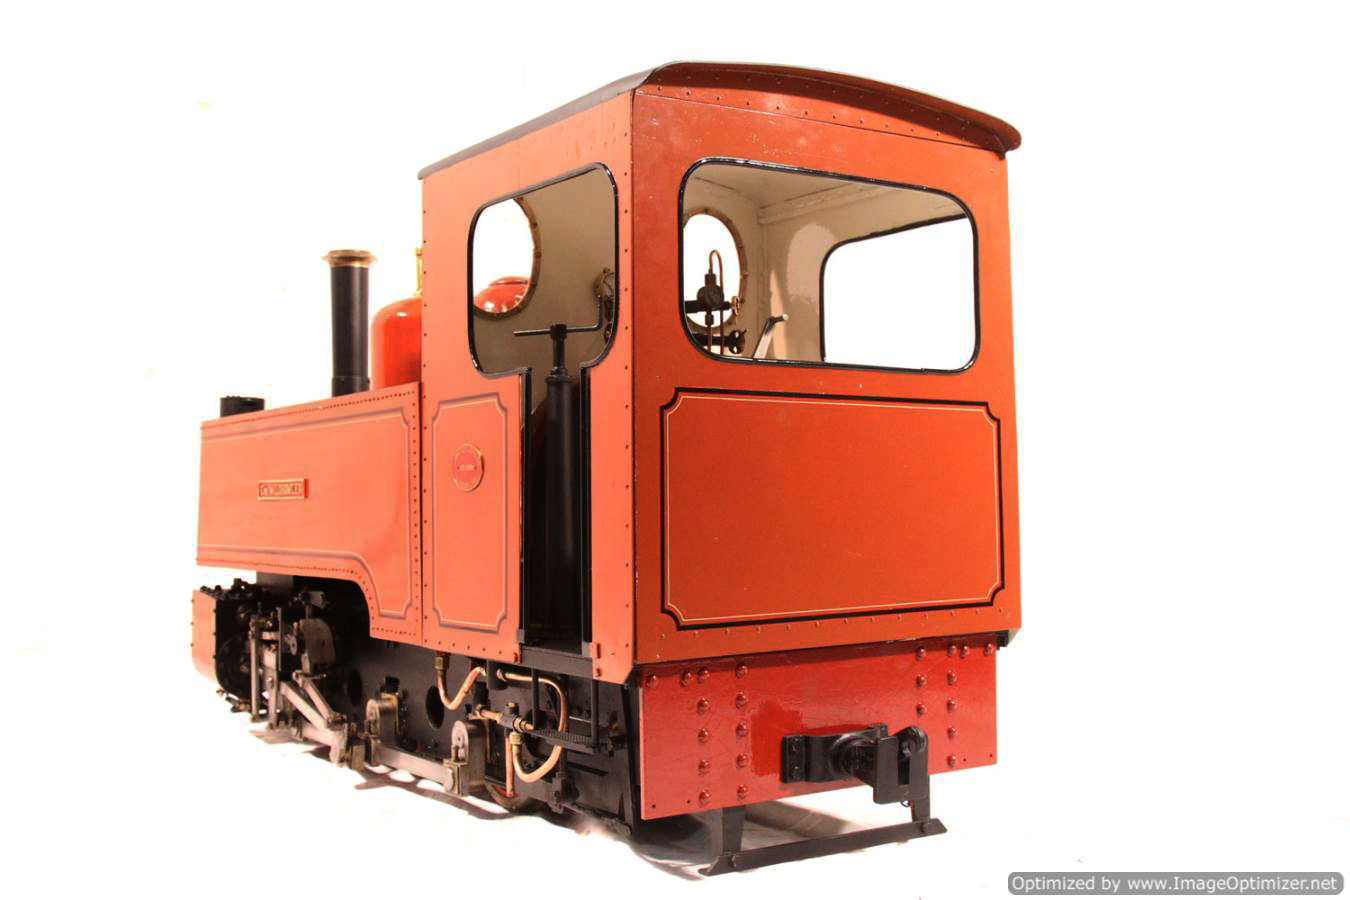 test 5 inch Gauge Fowler Live Steam Locomotive for sale 02 Optimized